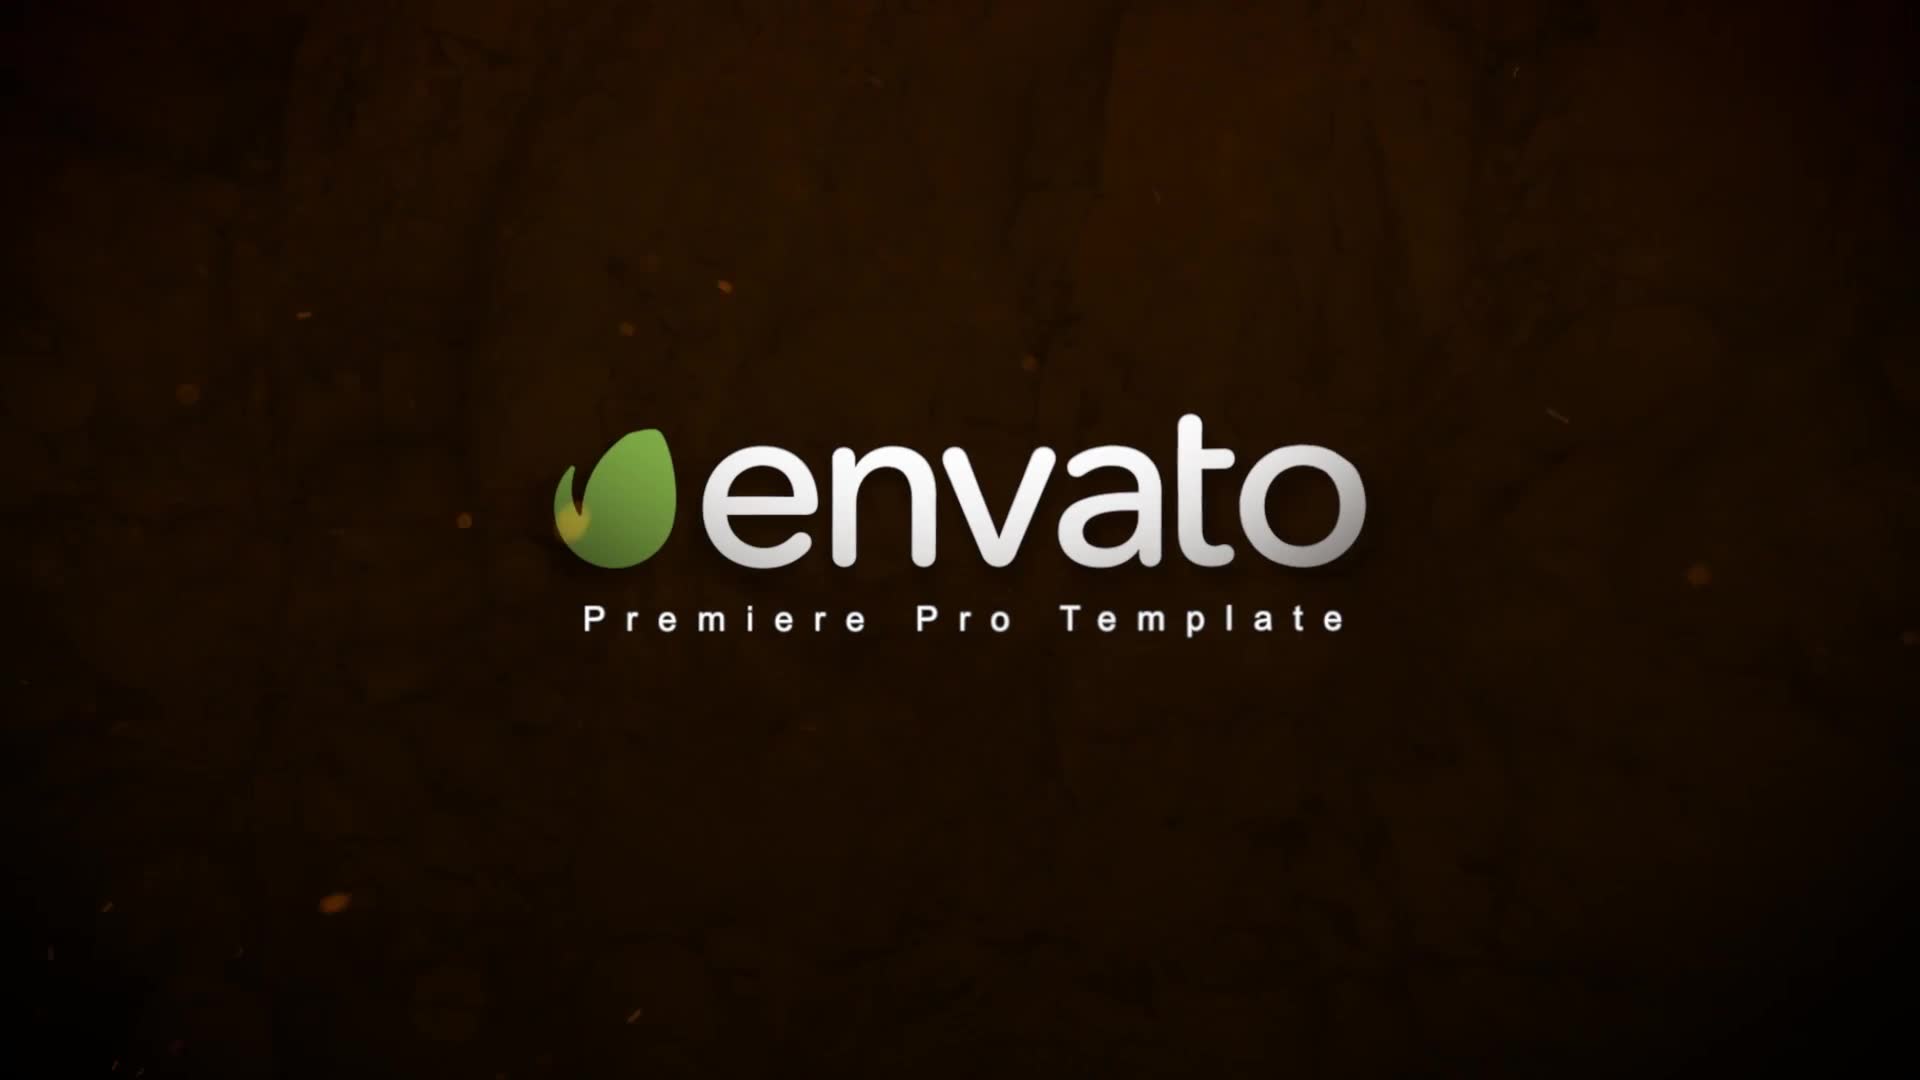 Envato elements. Fire logo after Effects. Warner Premiere logo. Https elements com